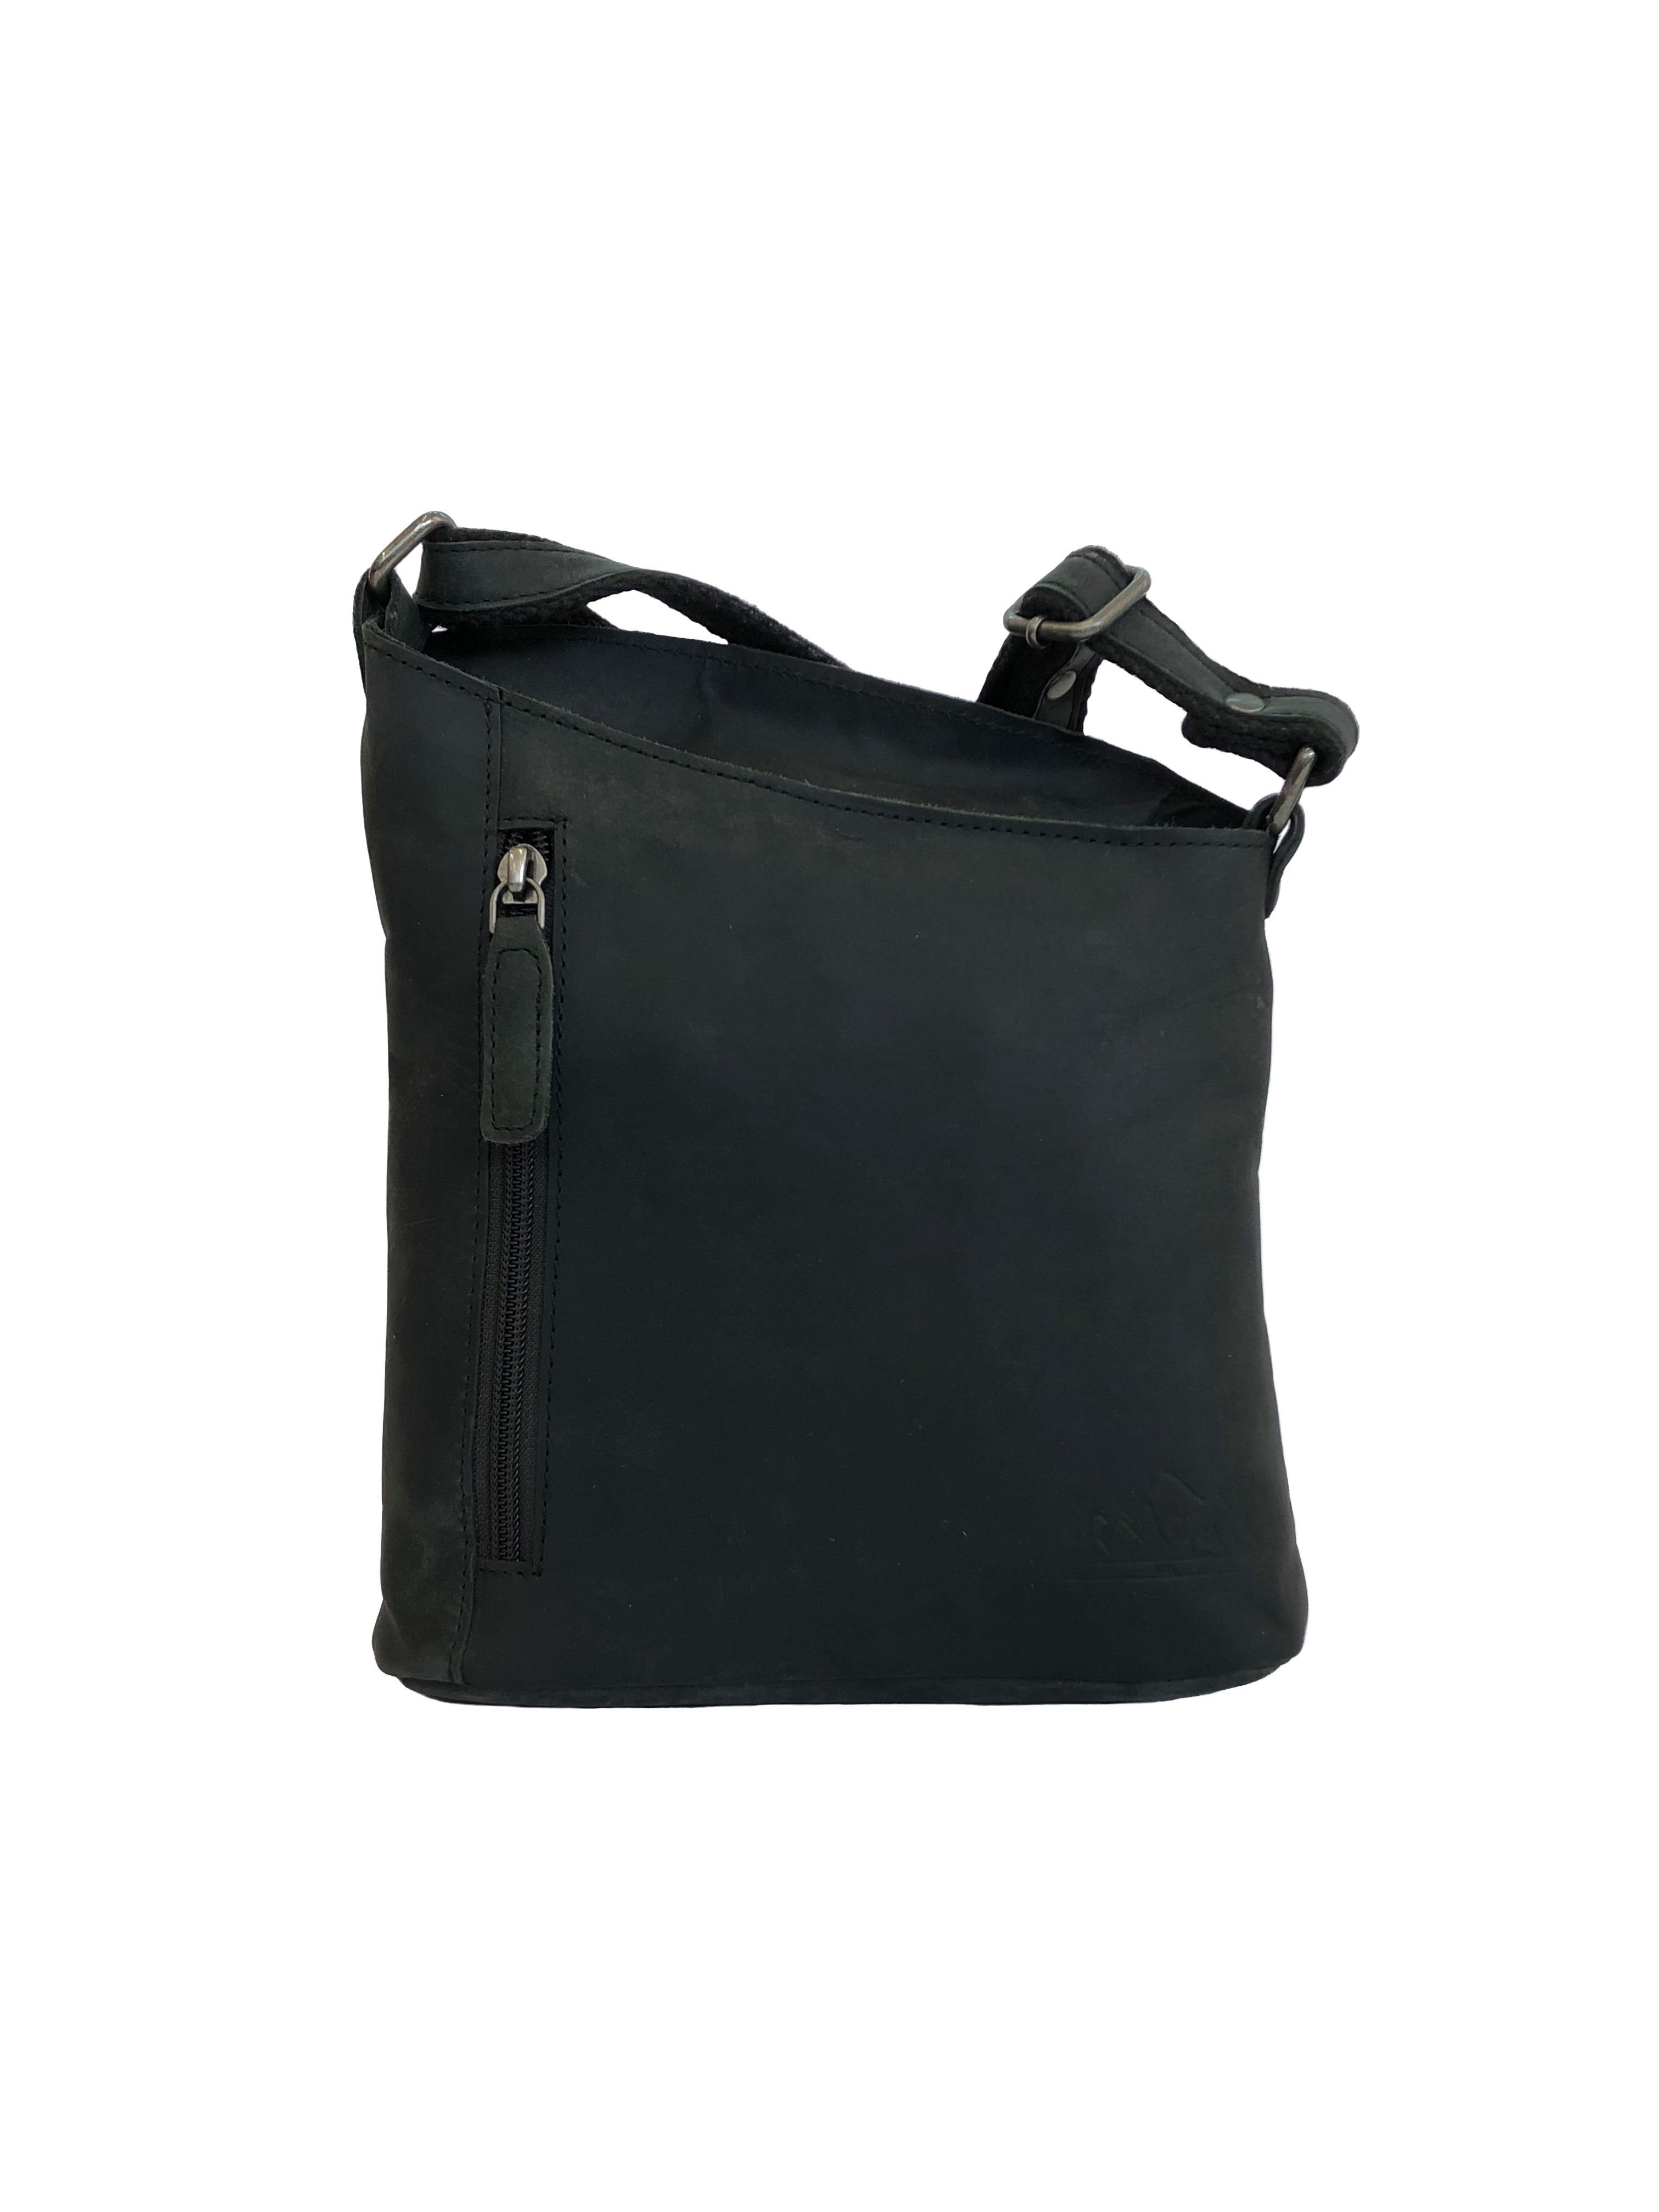 Bayern Bag Bag Ledertasche Umhängetasche Crossbody Vintage Black Handtasche PAULA